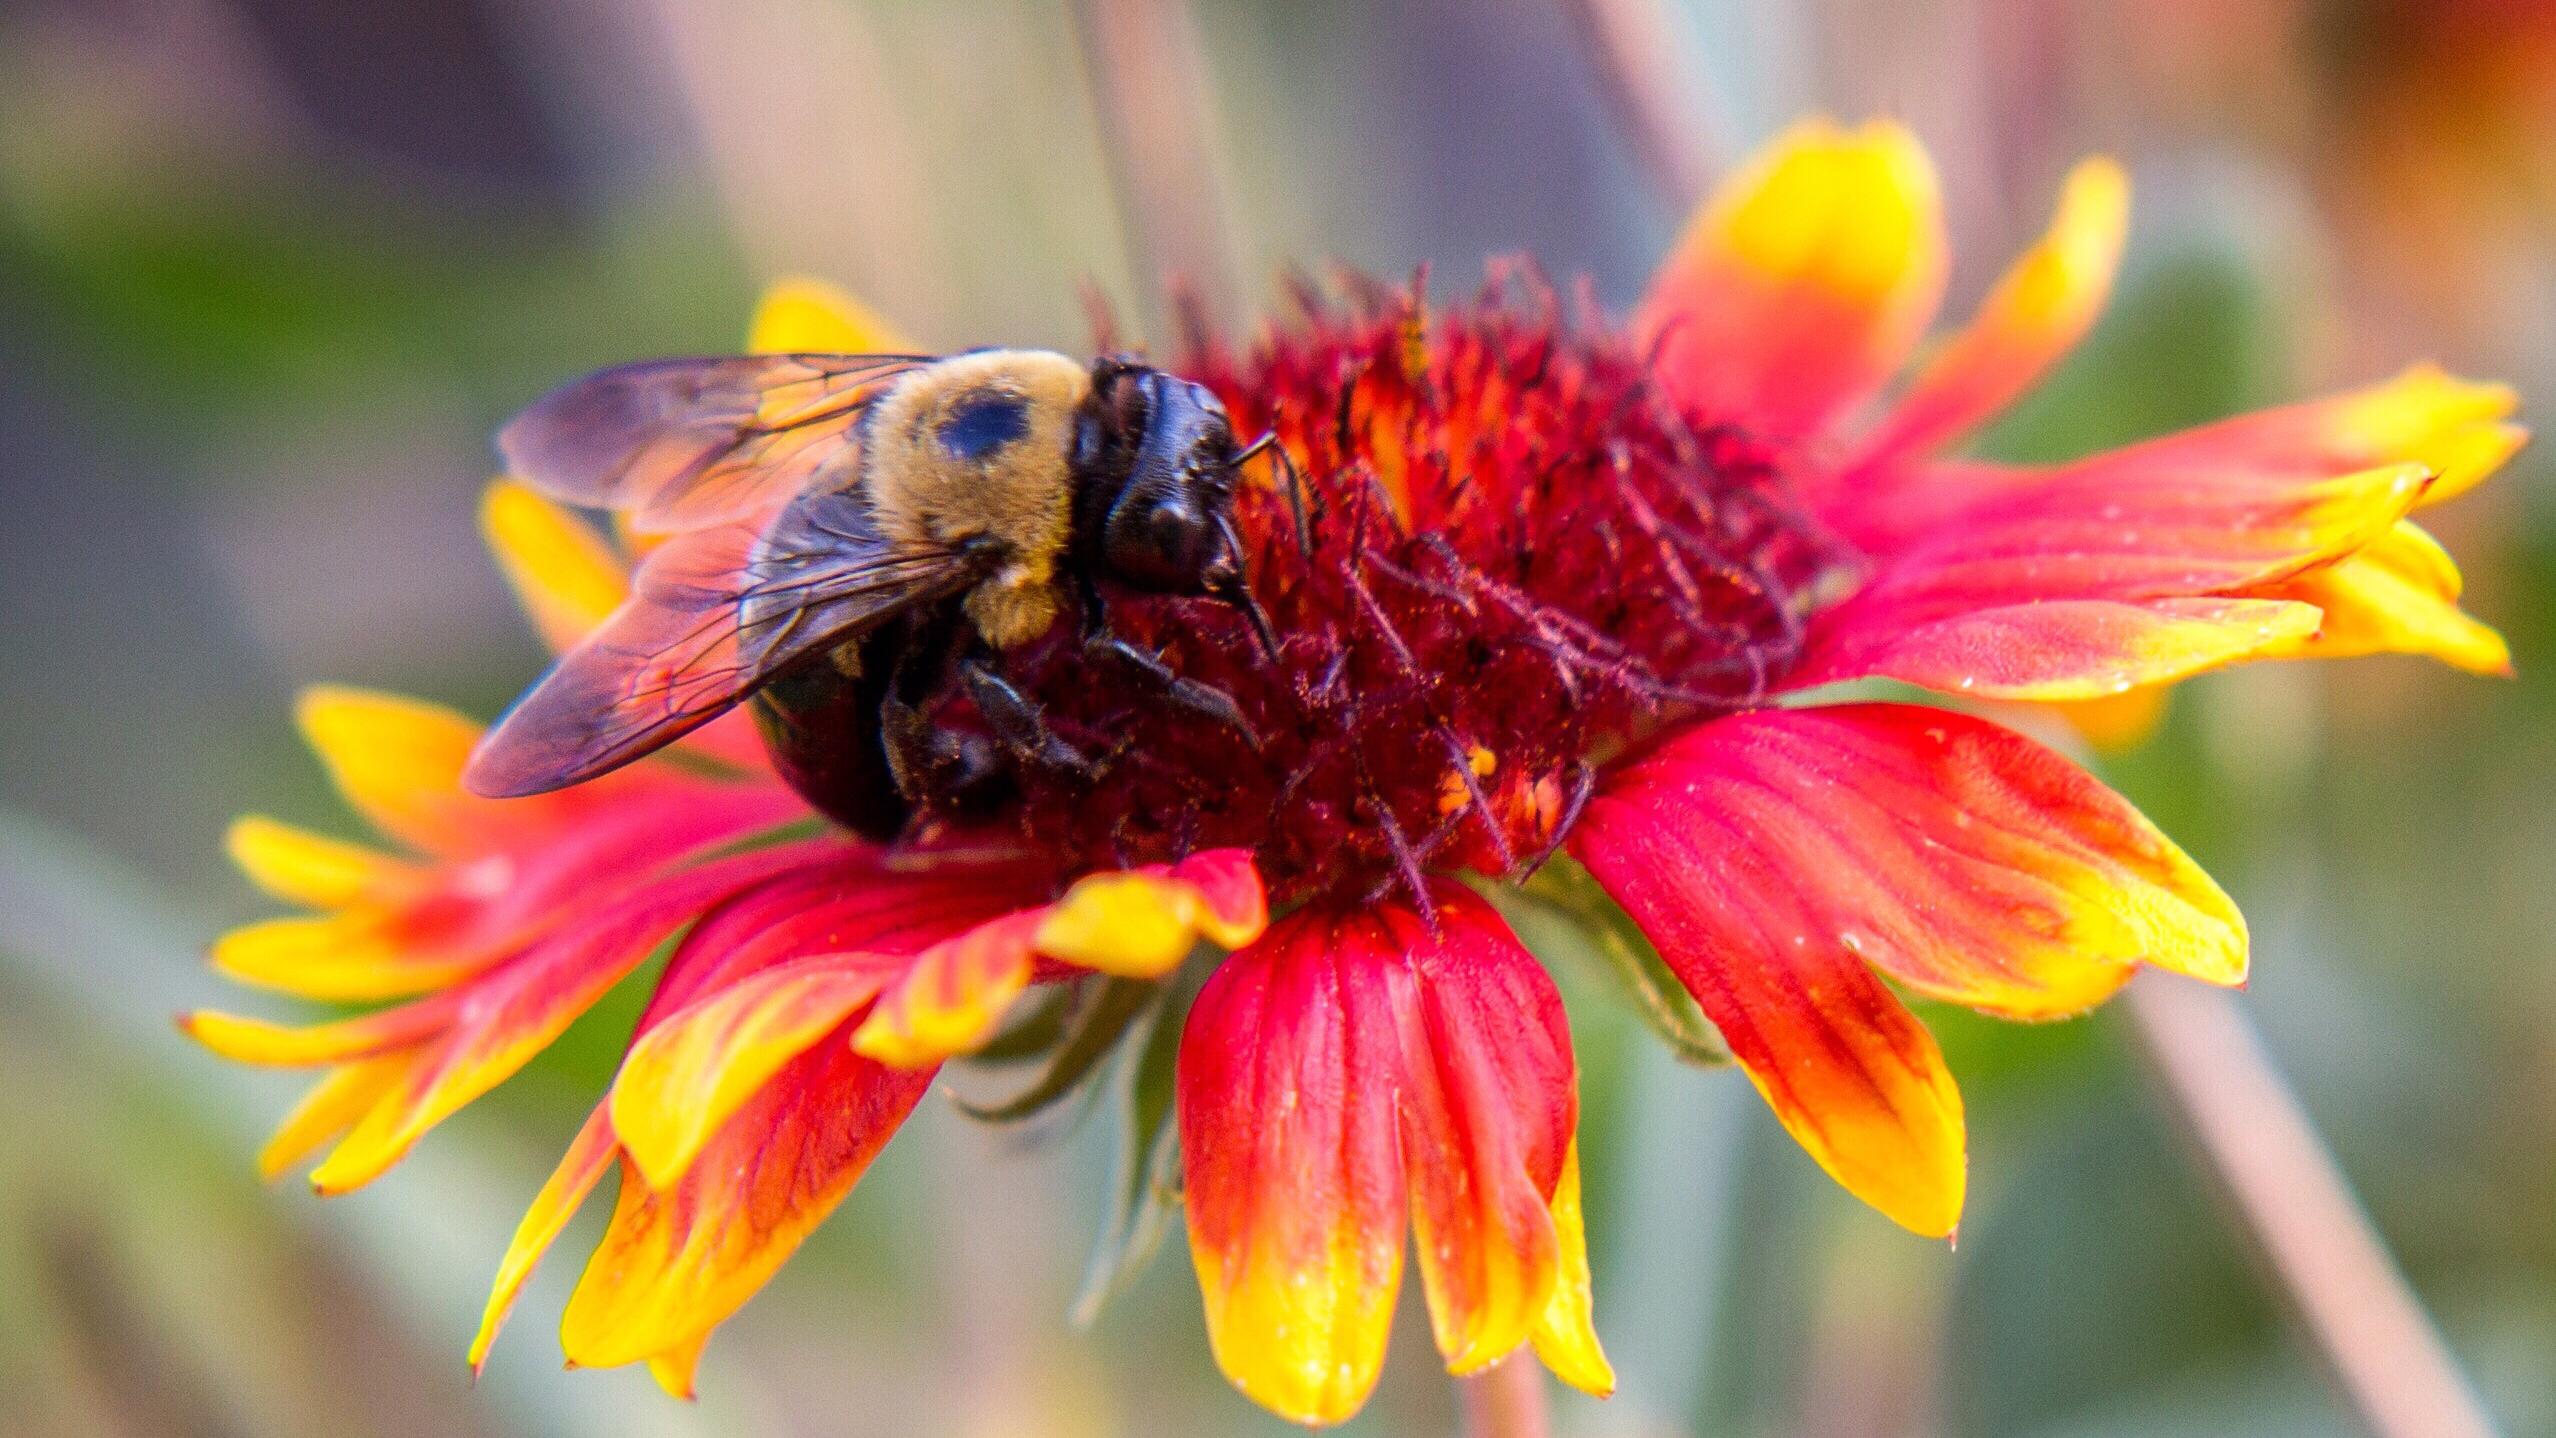 a-bee-in-a-fall-flower-2021-11-05-18-22-04-utc (2)